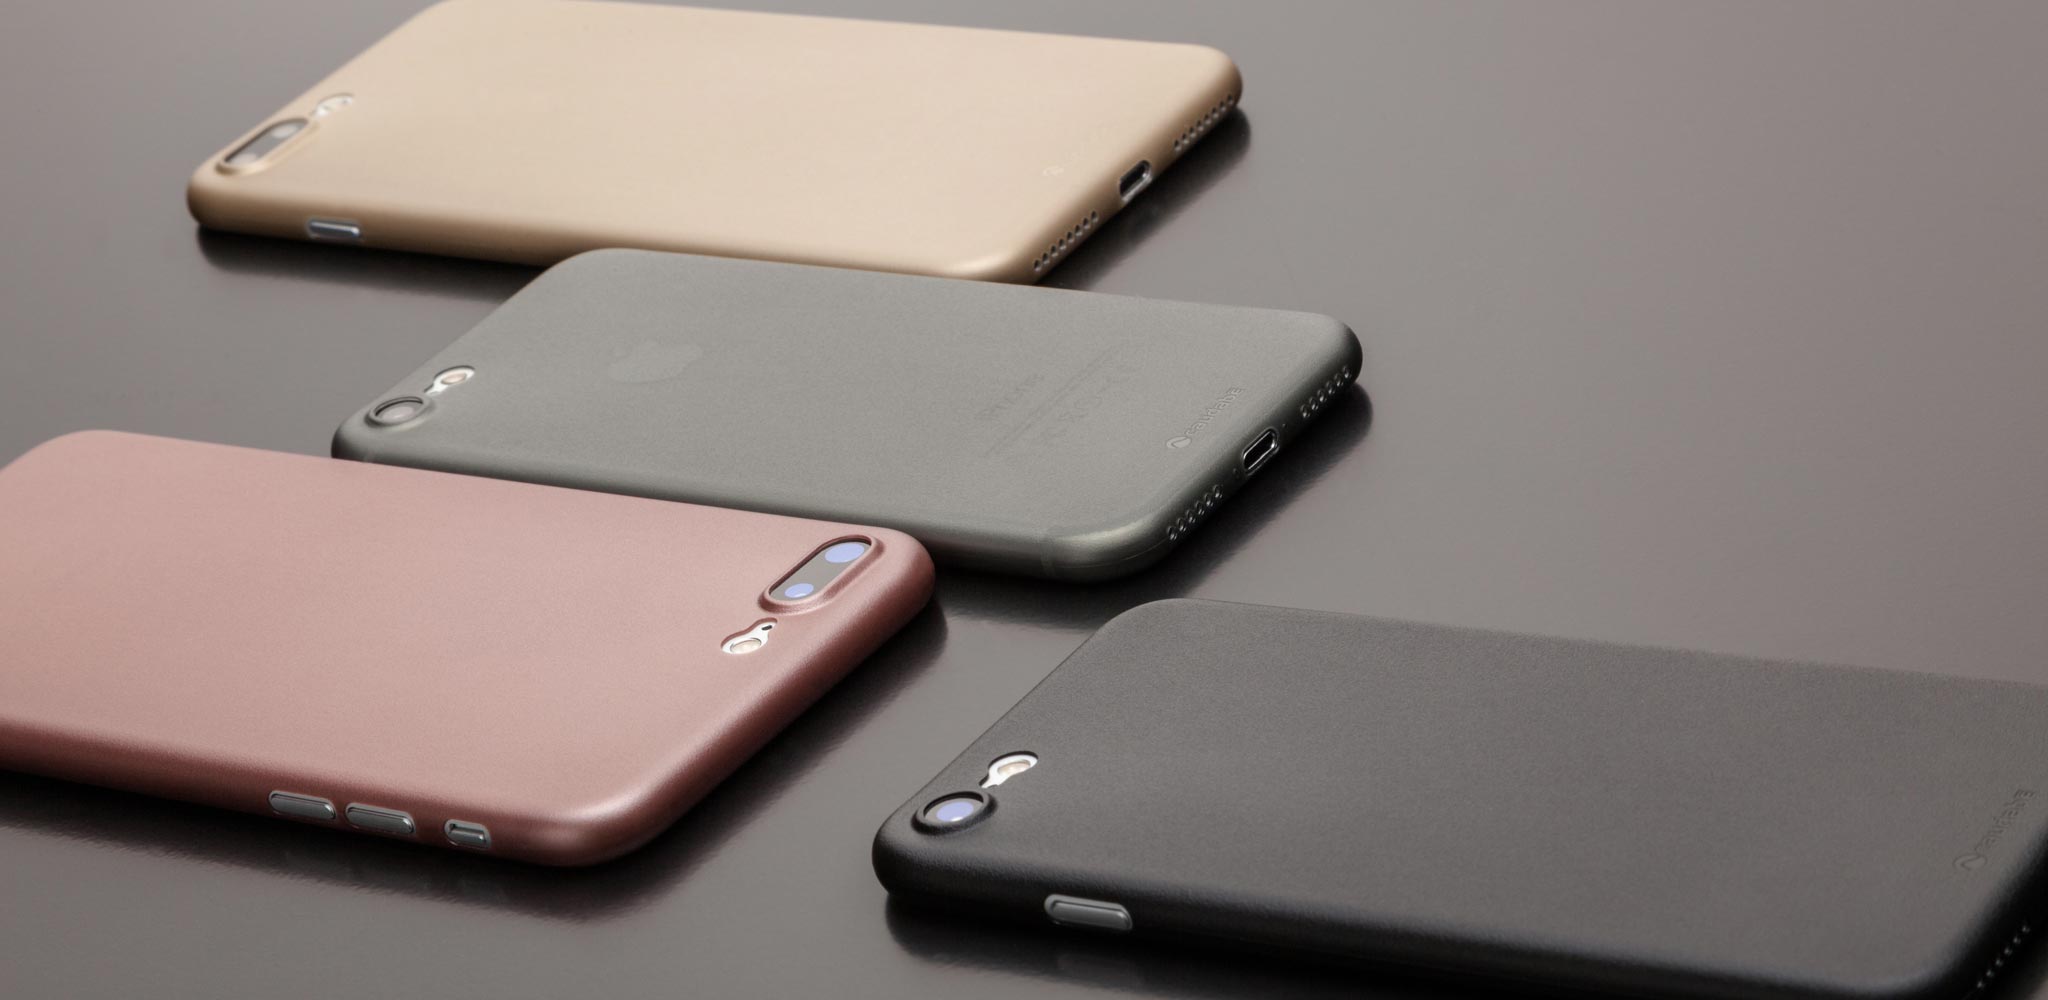 Caudabe Veil XT | Ultra thin iPhone 7 Plus case | Layout